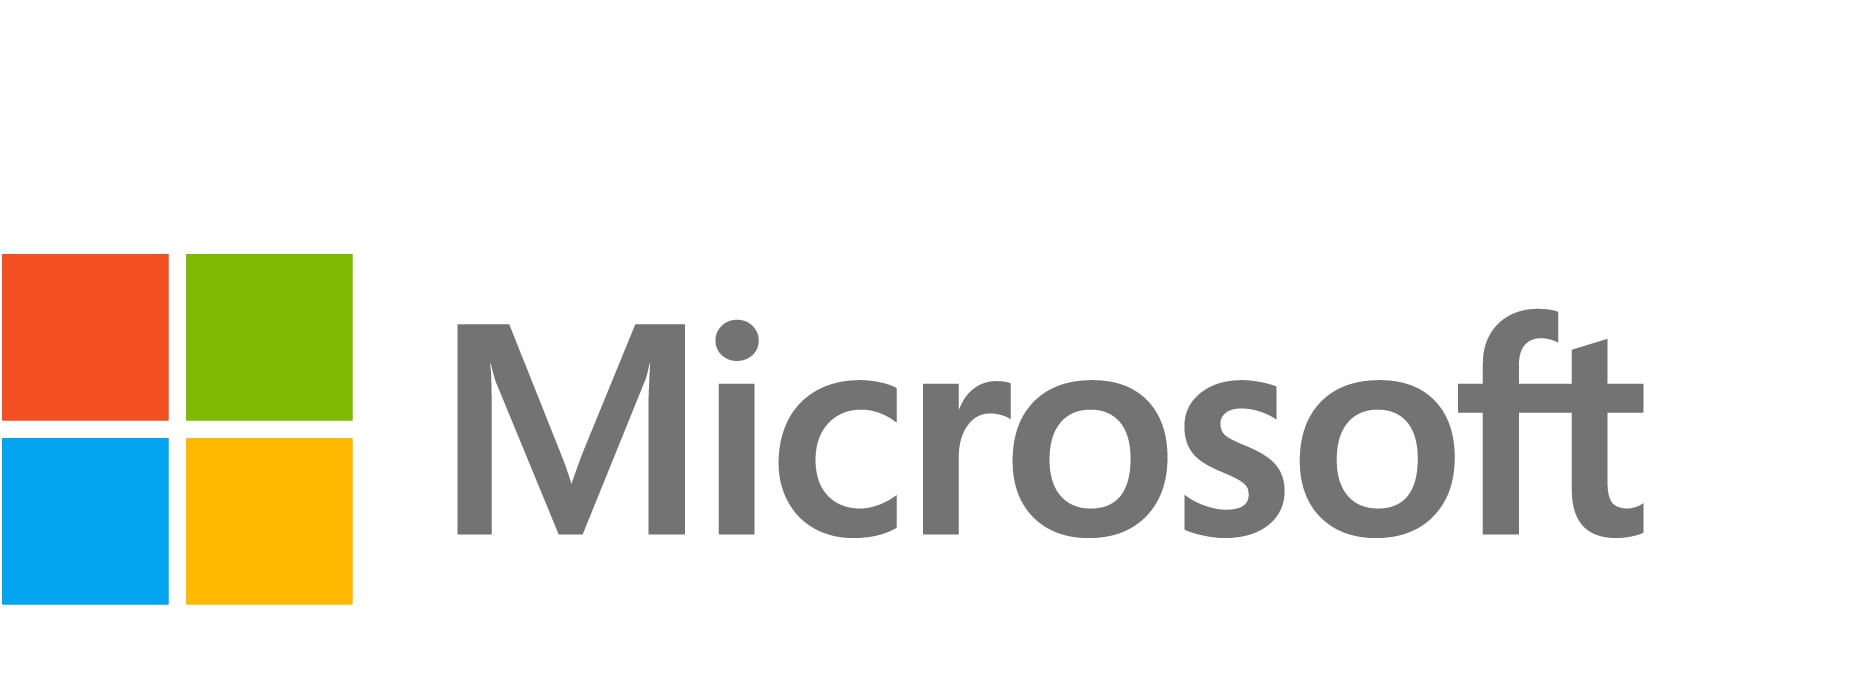 Microsoft Dynamics 365 Operations Sandbox Tier 4: Standard Performance Testing - subscription license (1 year) - 1